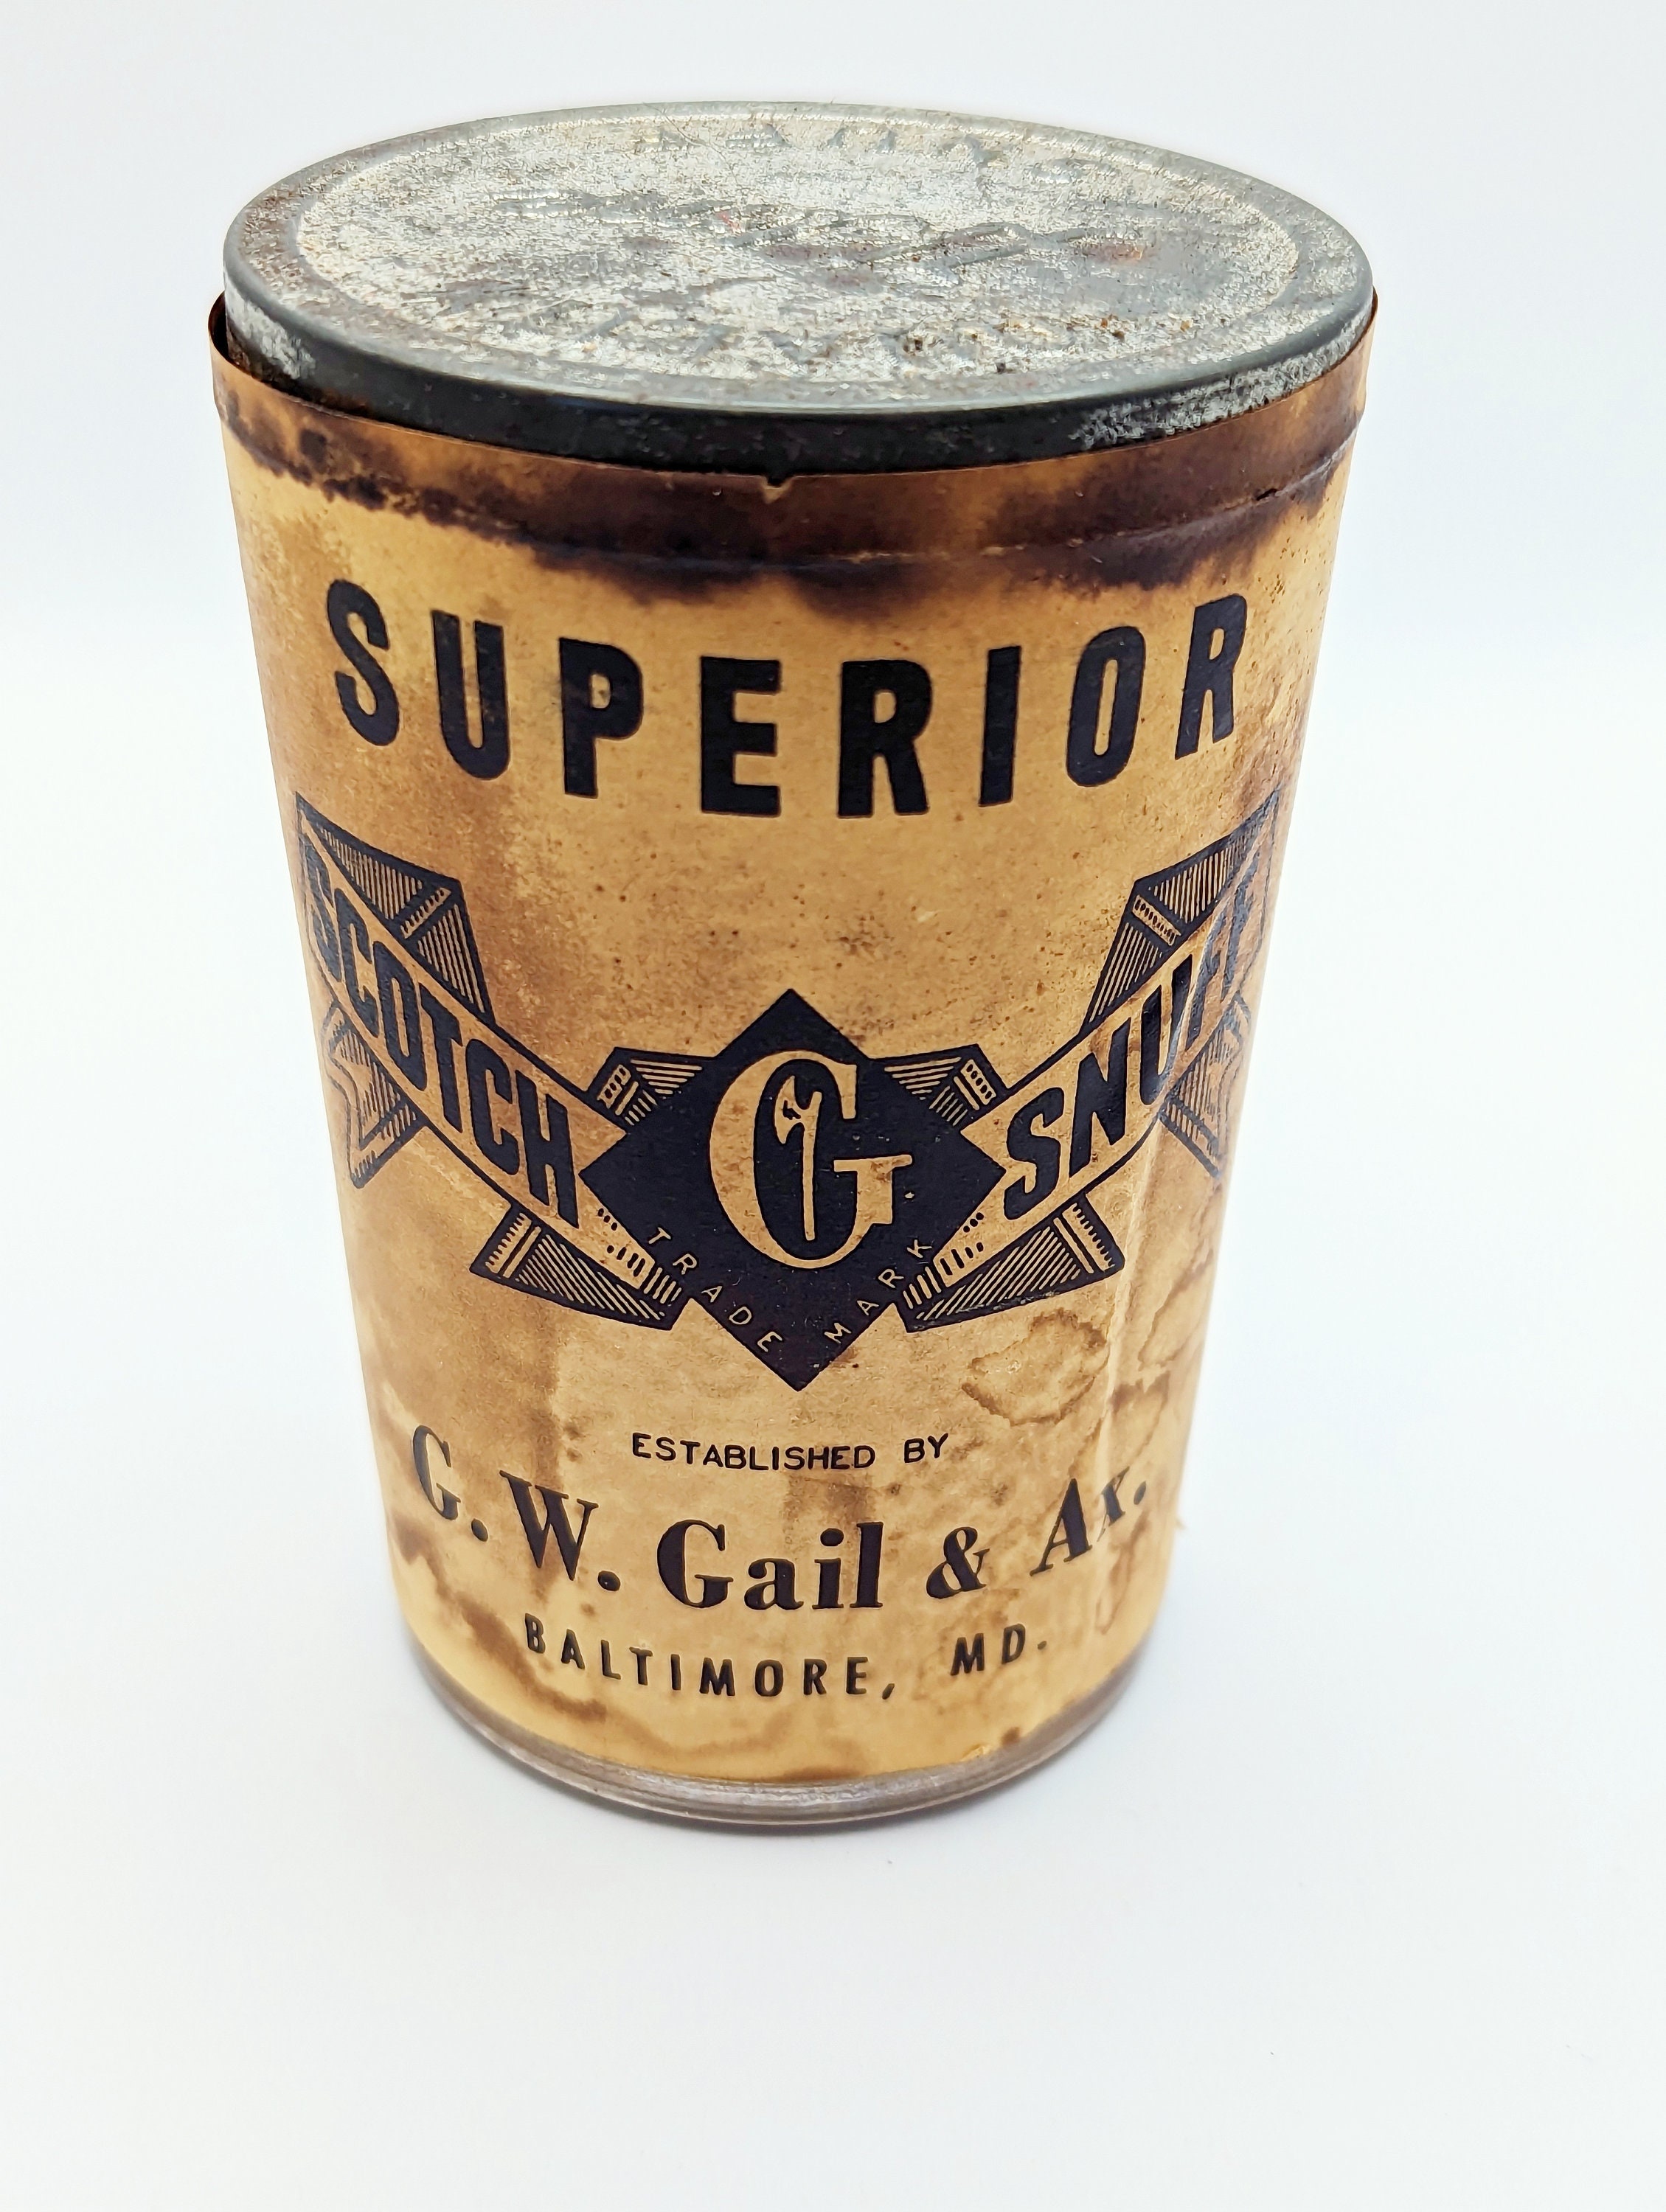 Vintage Tobacco Scotch & Rappee Snuff Bottle – Post Furnishings